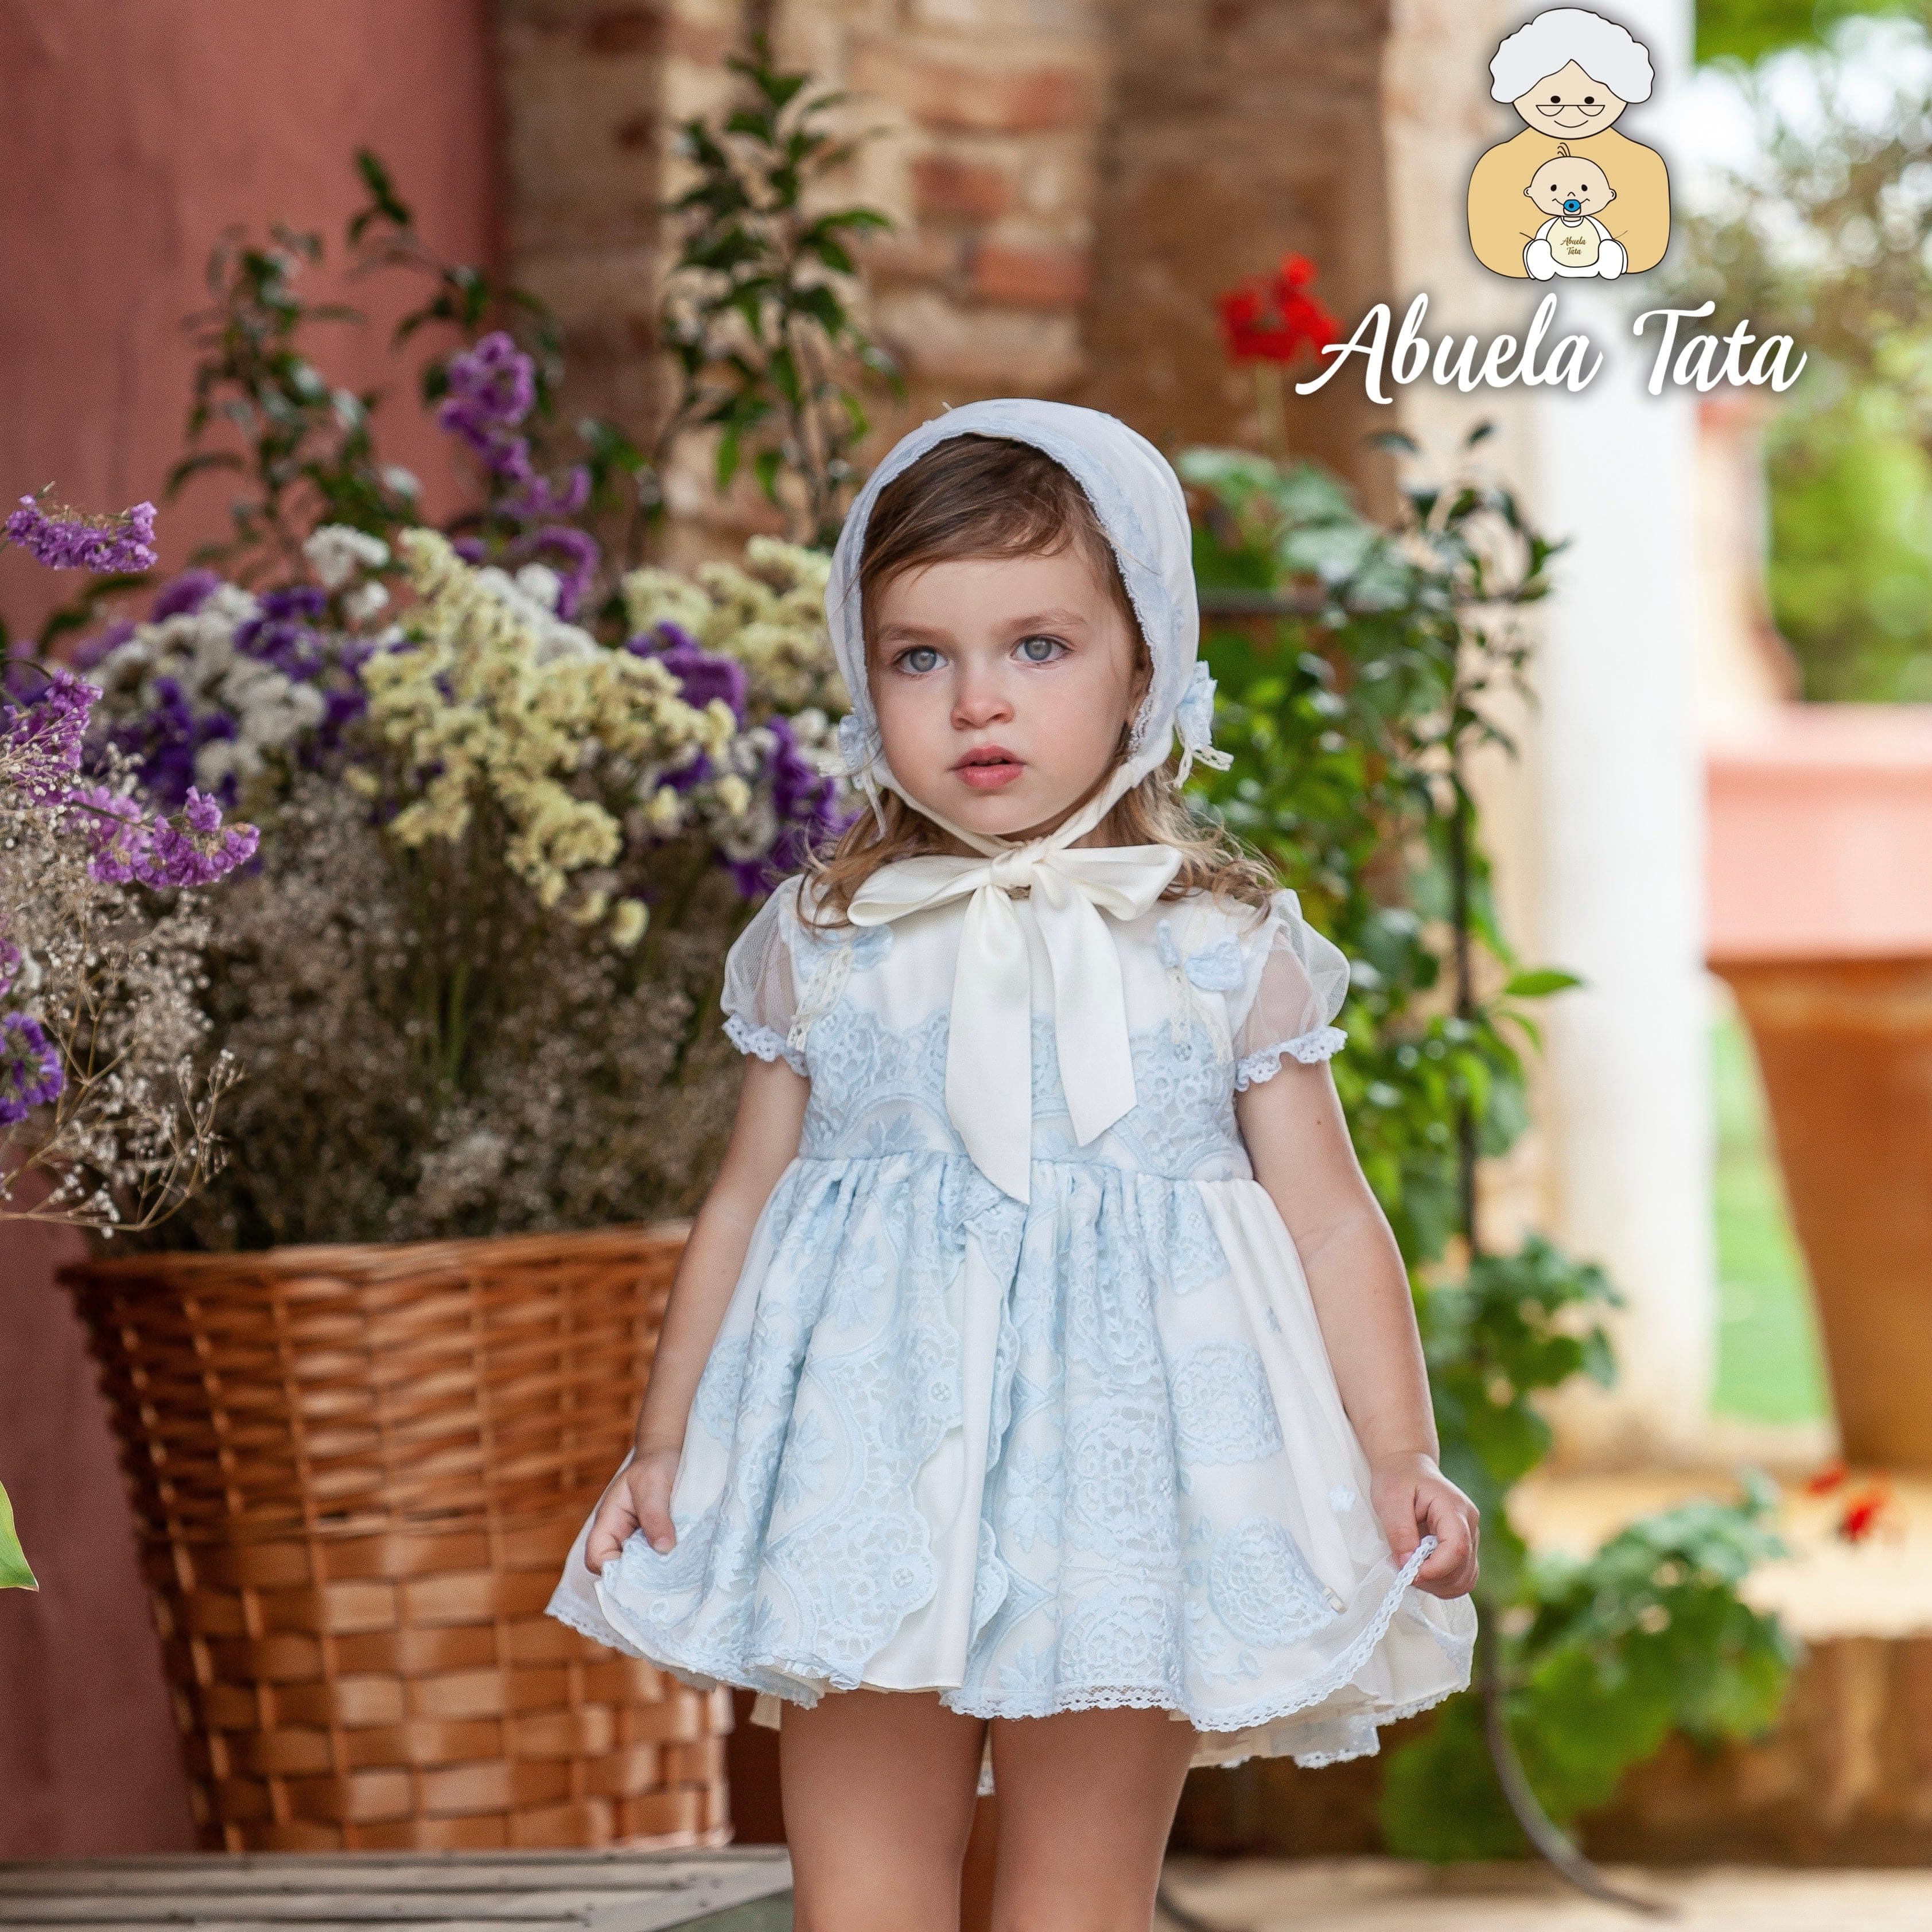 ABUELA TATA - Ceremony Lace Baby Dress & Bonnet - Blue